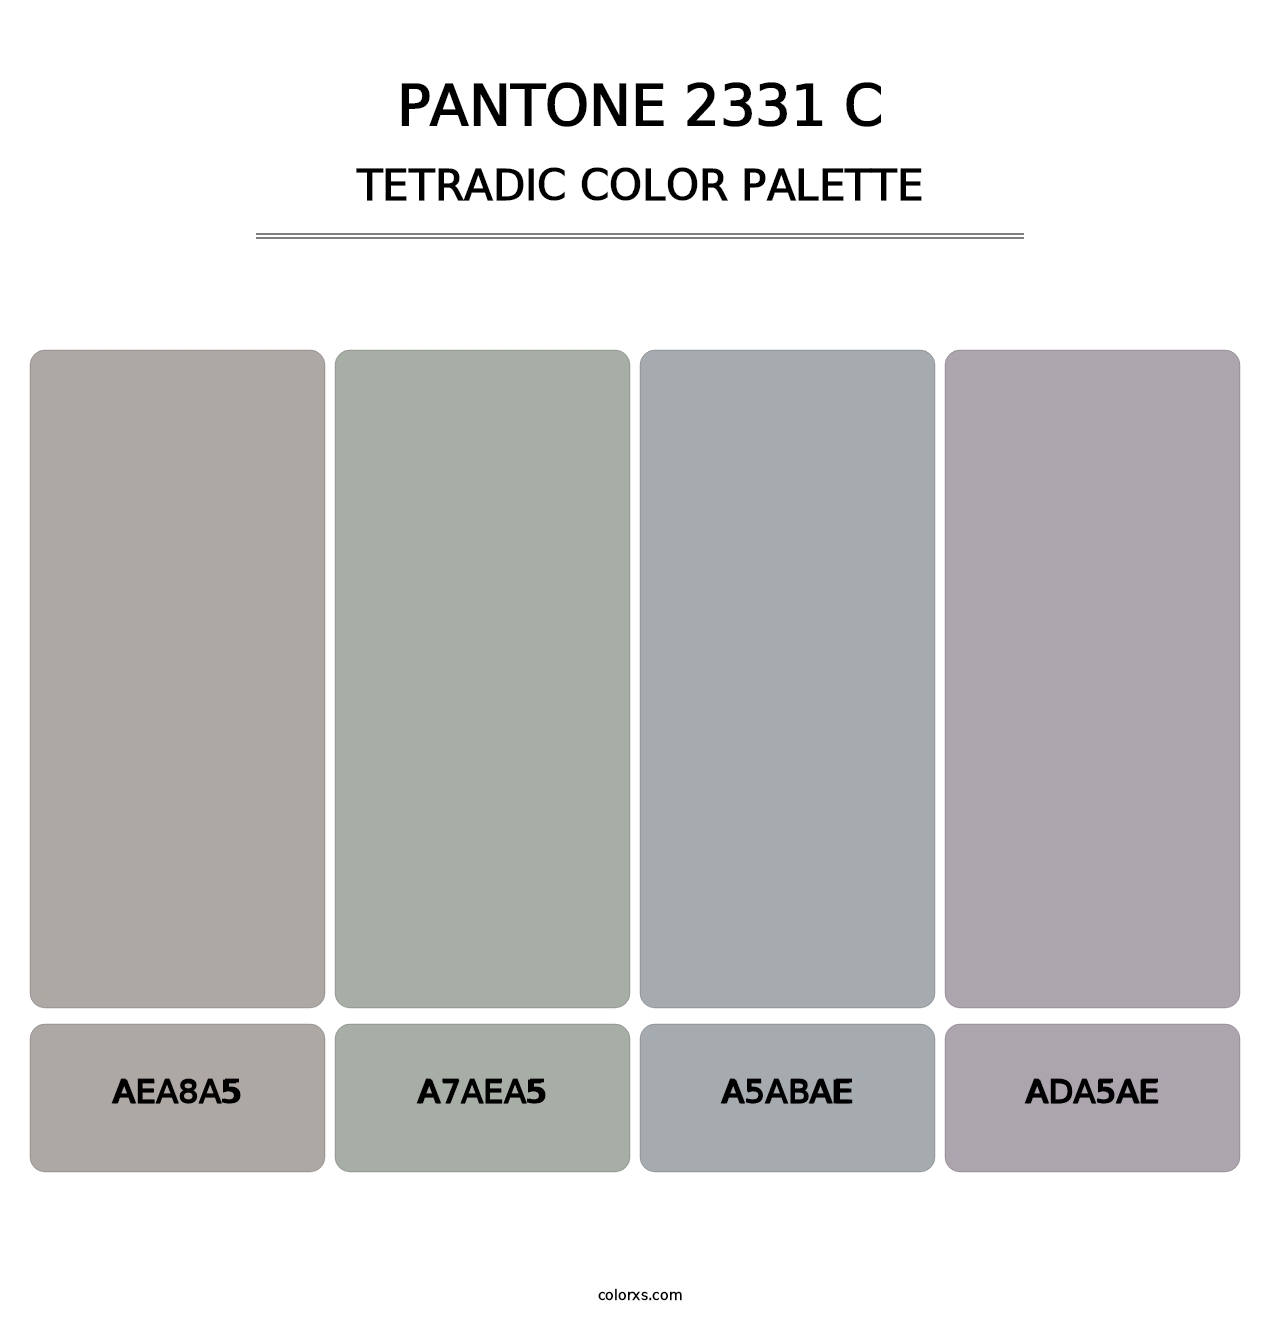 PANTONE 2331 C - Tetradic Color Palette